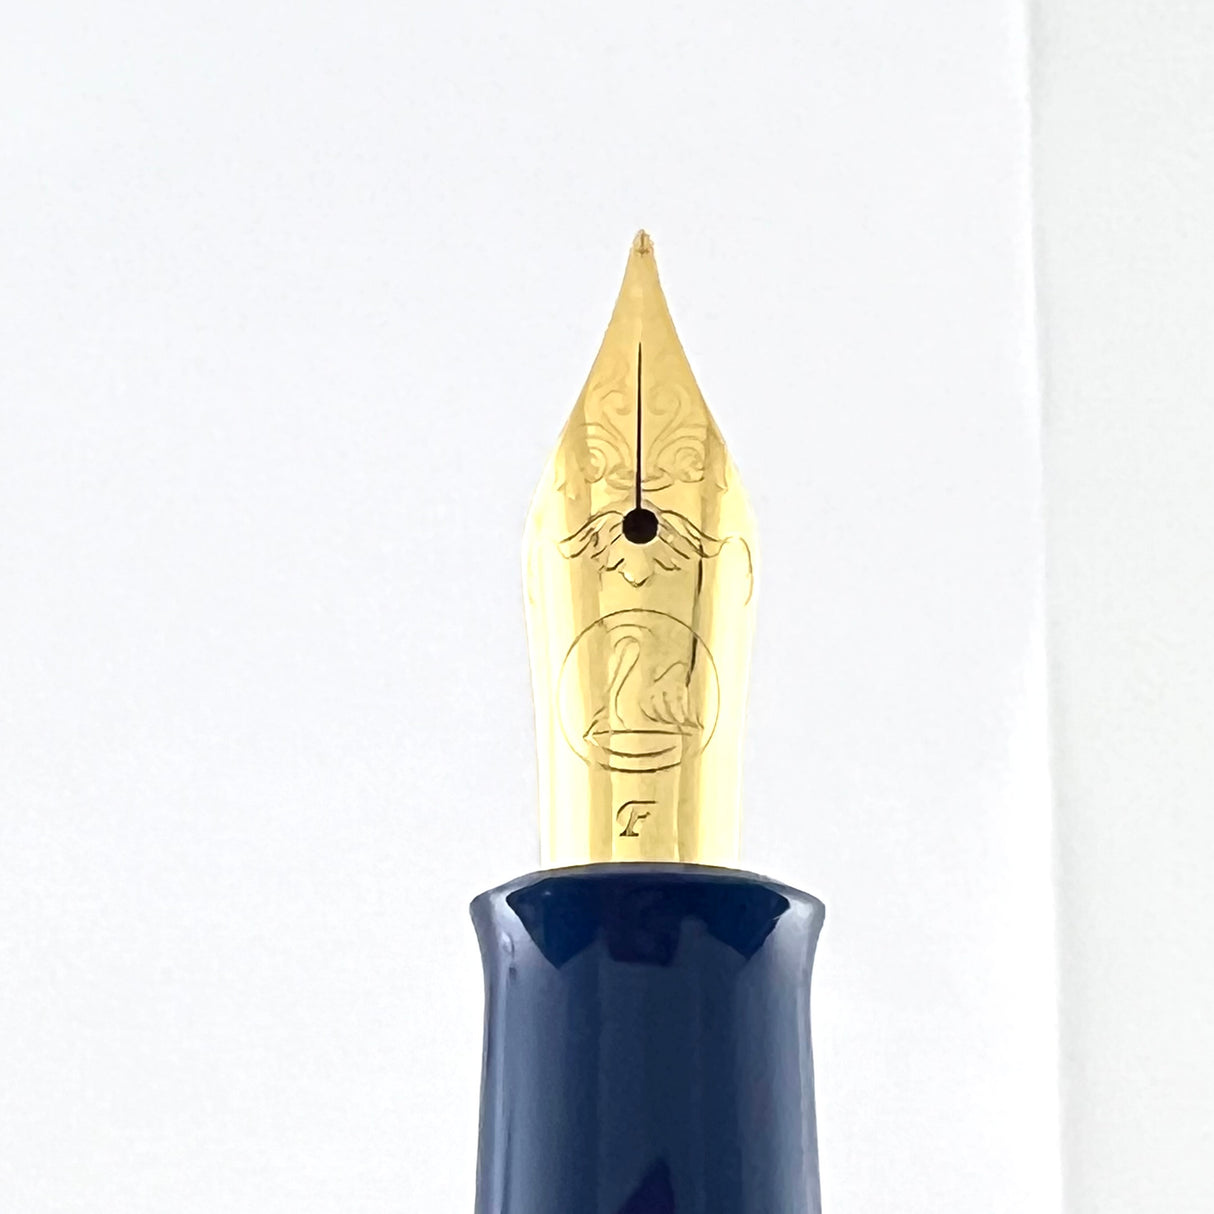 Pelikan M120 Iconic Blue Fountain Pen Fountain Pen